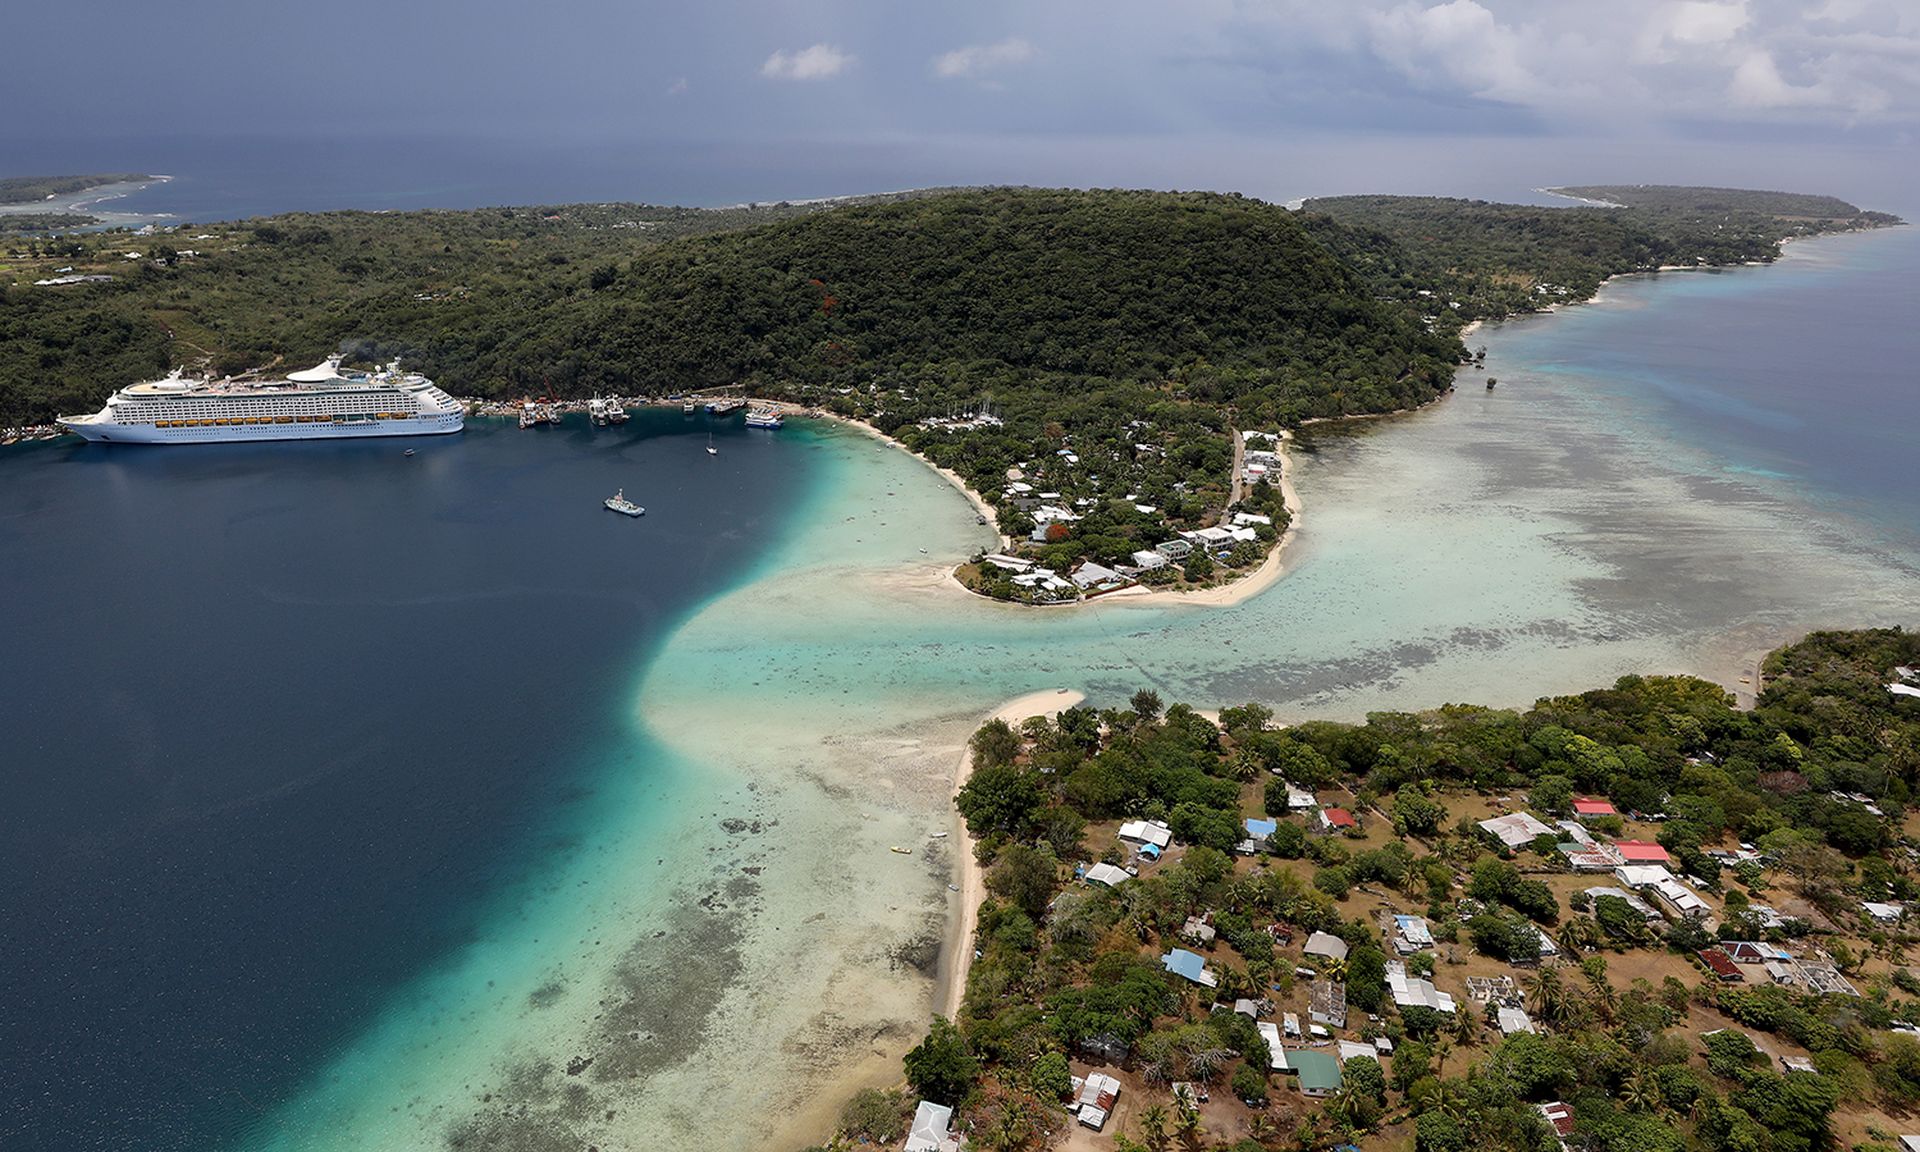 An aerial view of a cruise ship docked in Port Vila, Vanuatu.